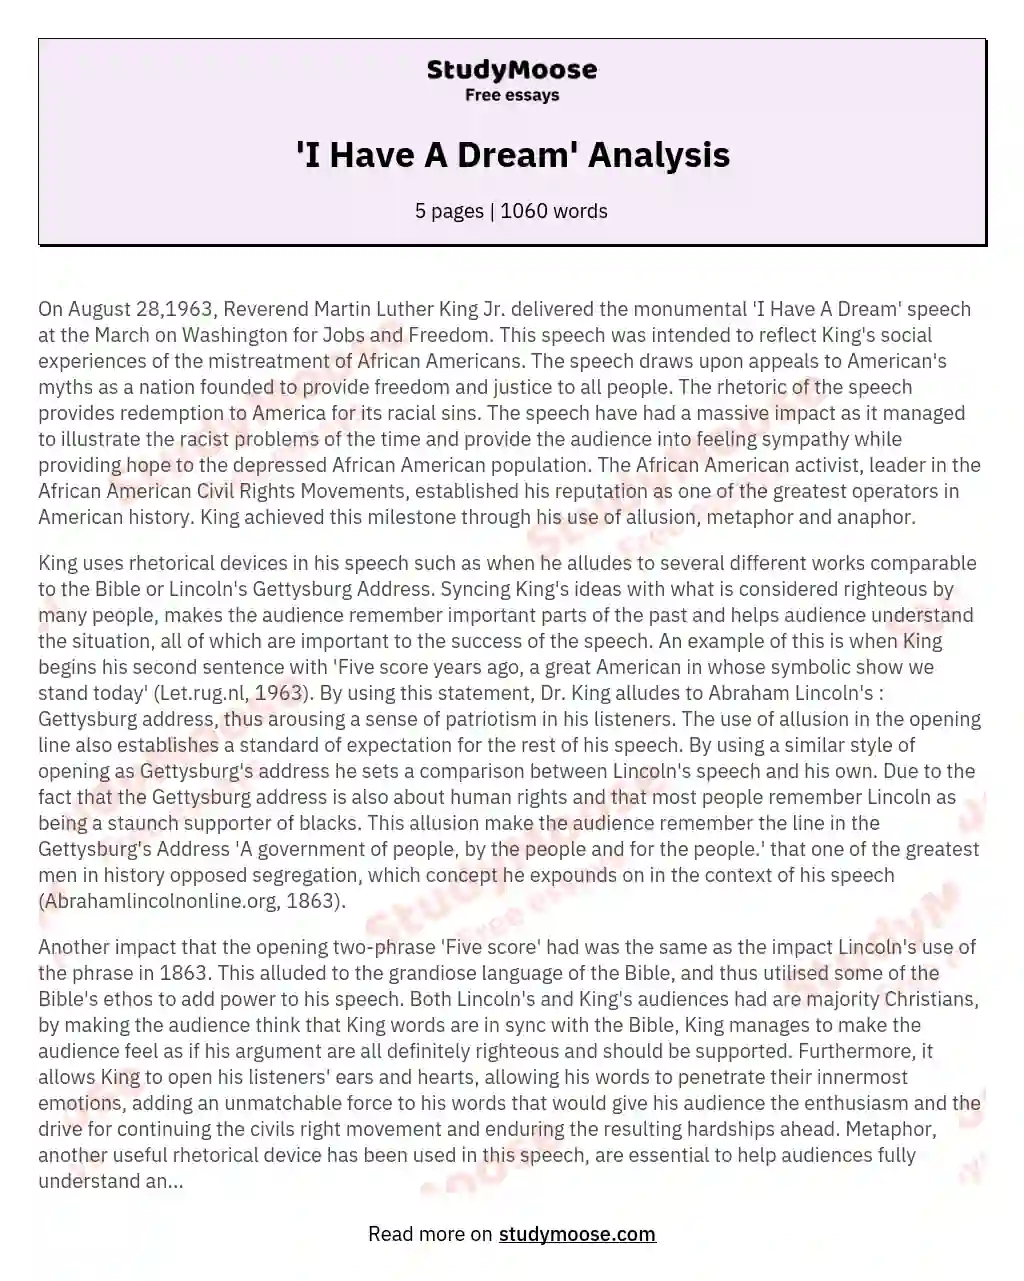 'I Have A Dream' Analysis essay